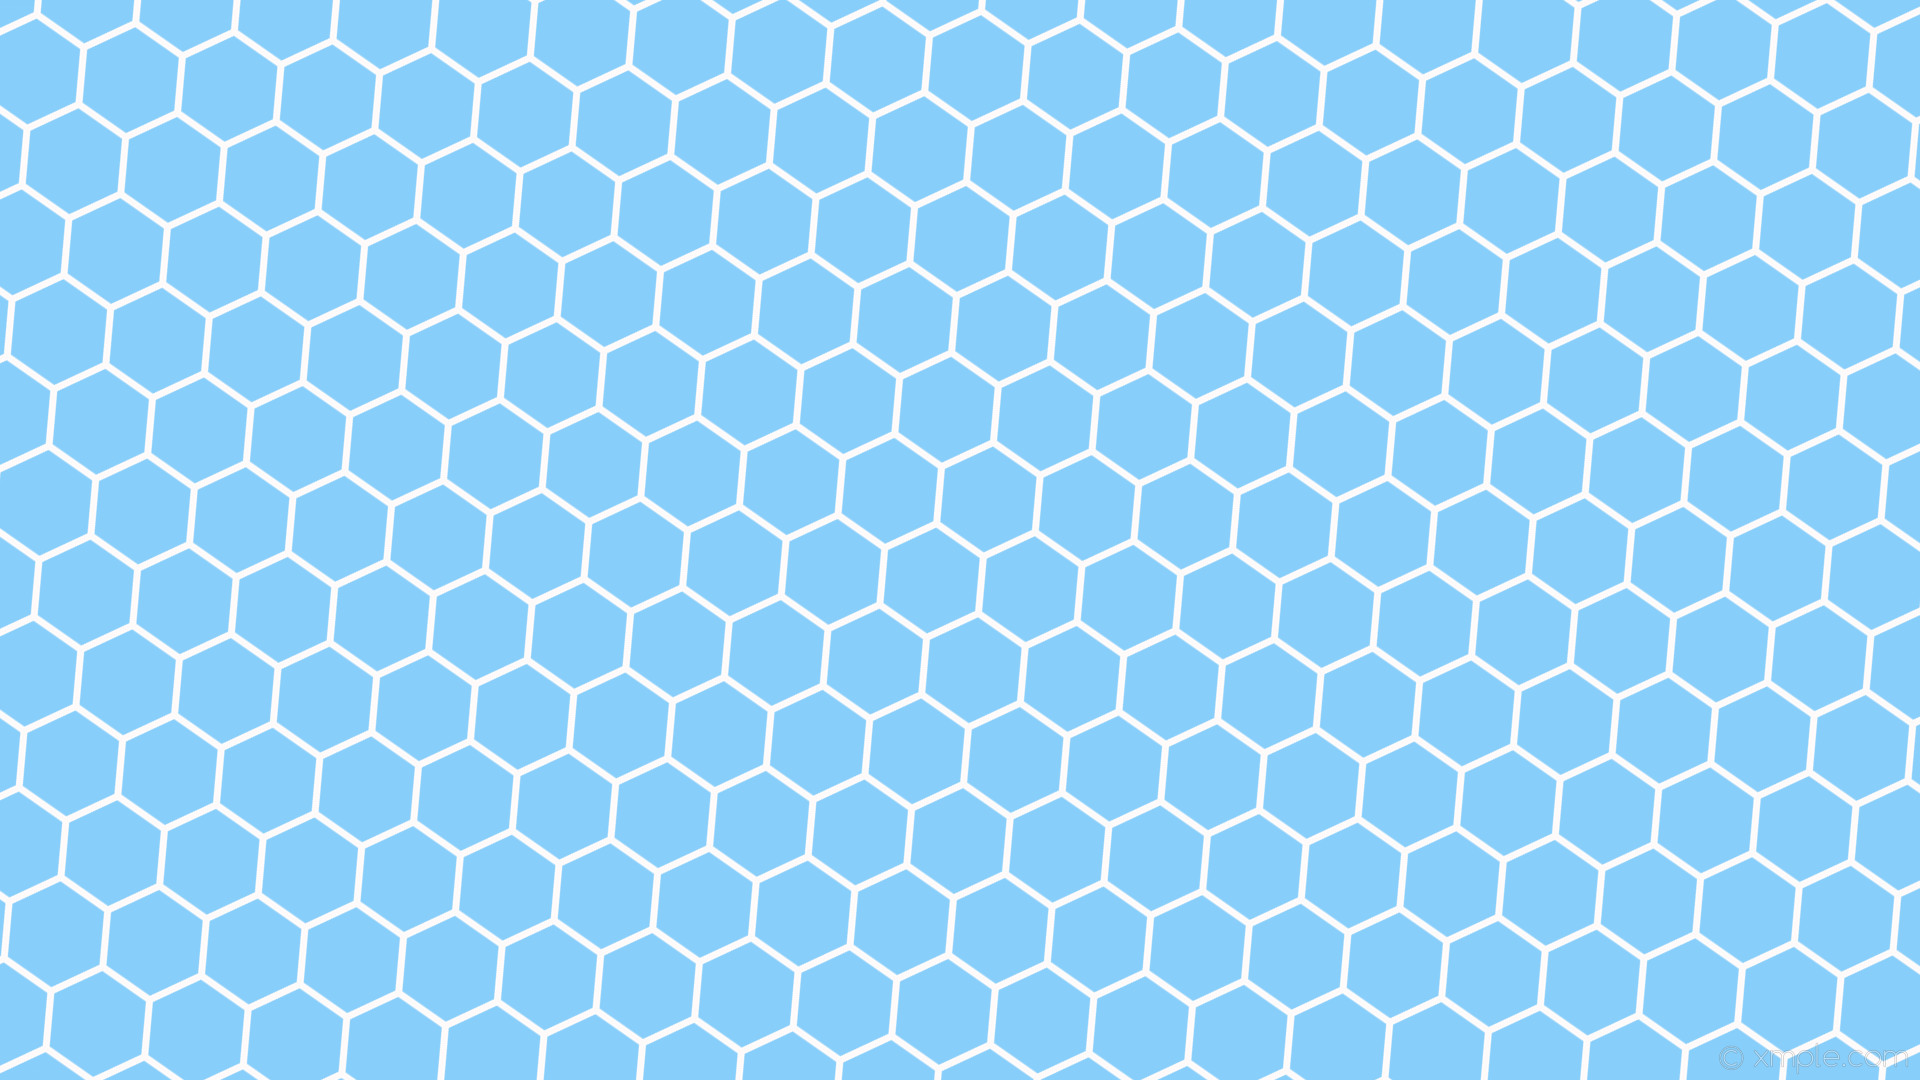 1920x1080 wallpaper beehive hexagon honeycomb blue white light sky blue snow #87cefa  #fffafa diagonal 55